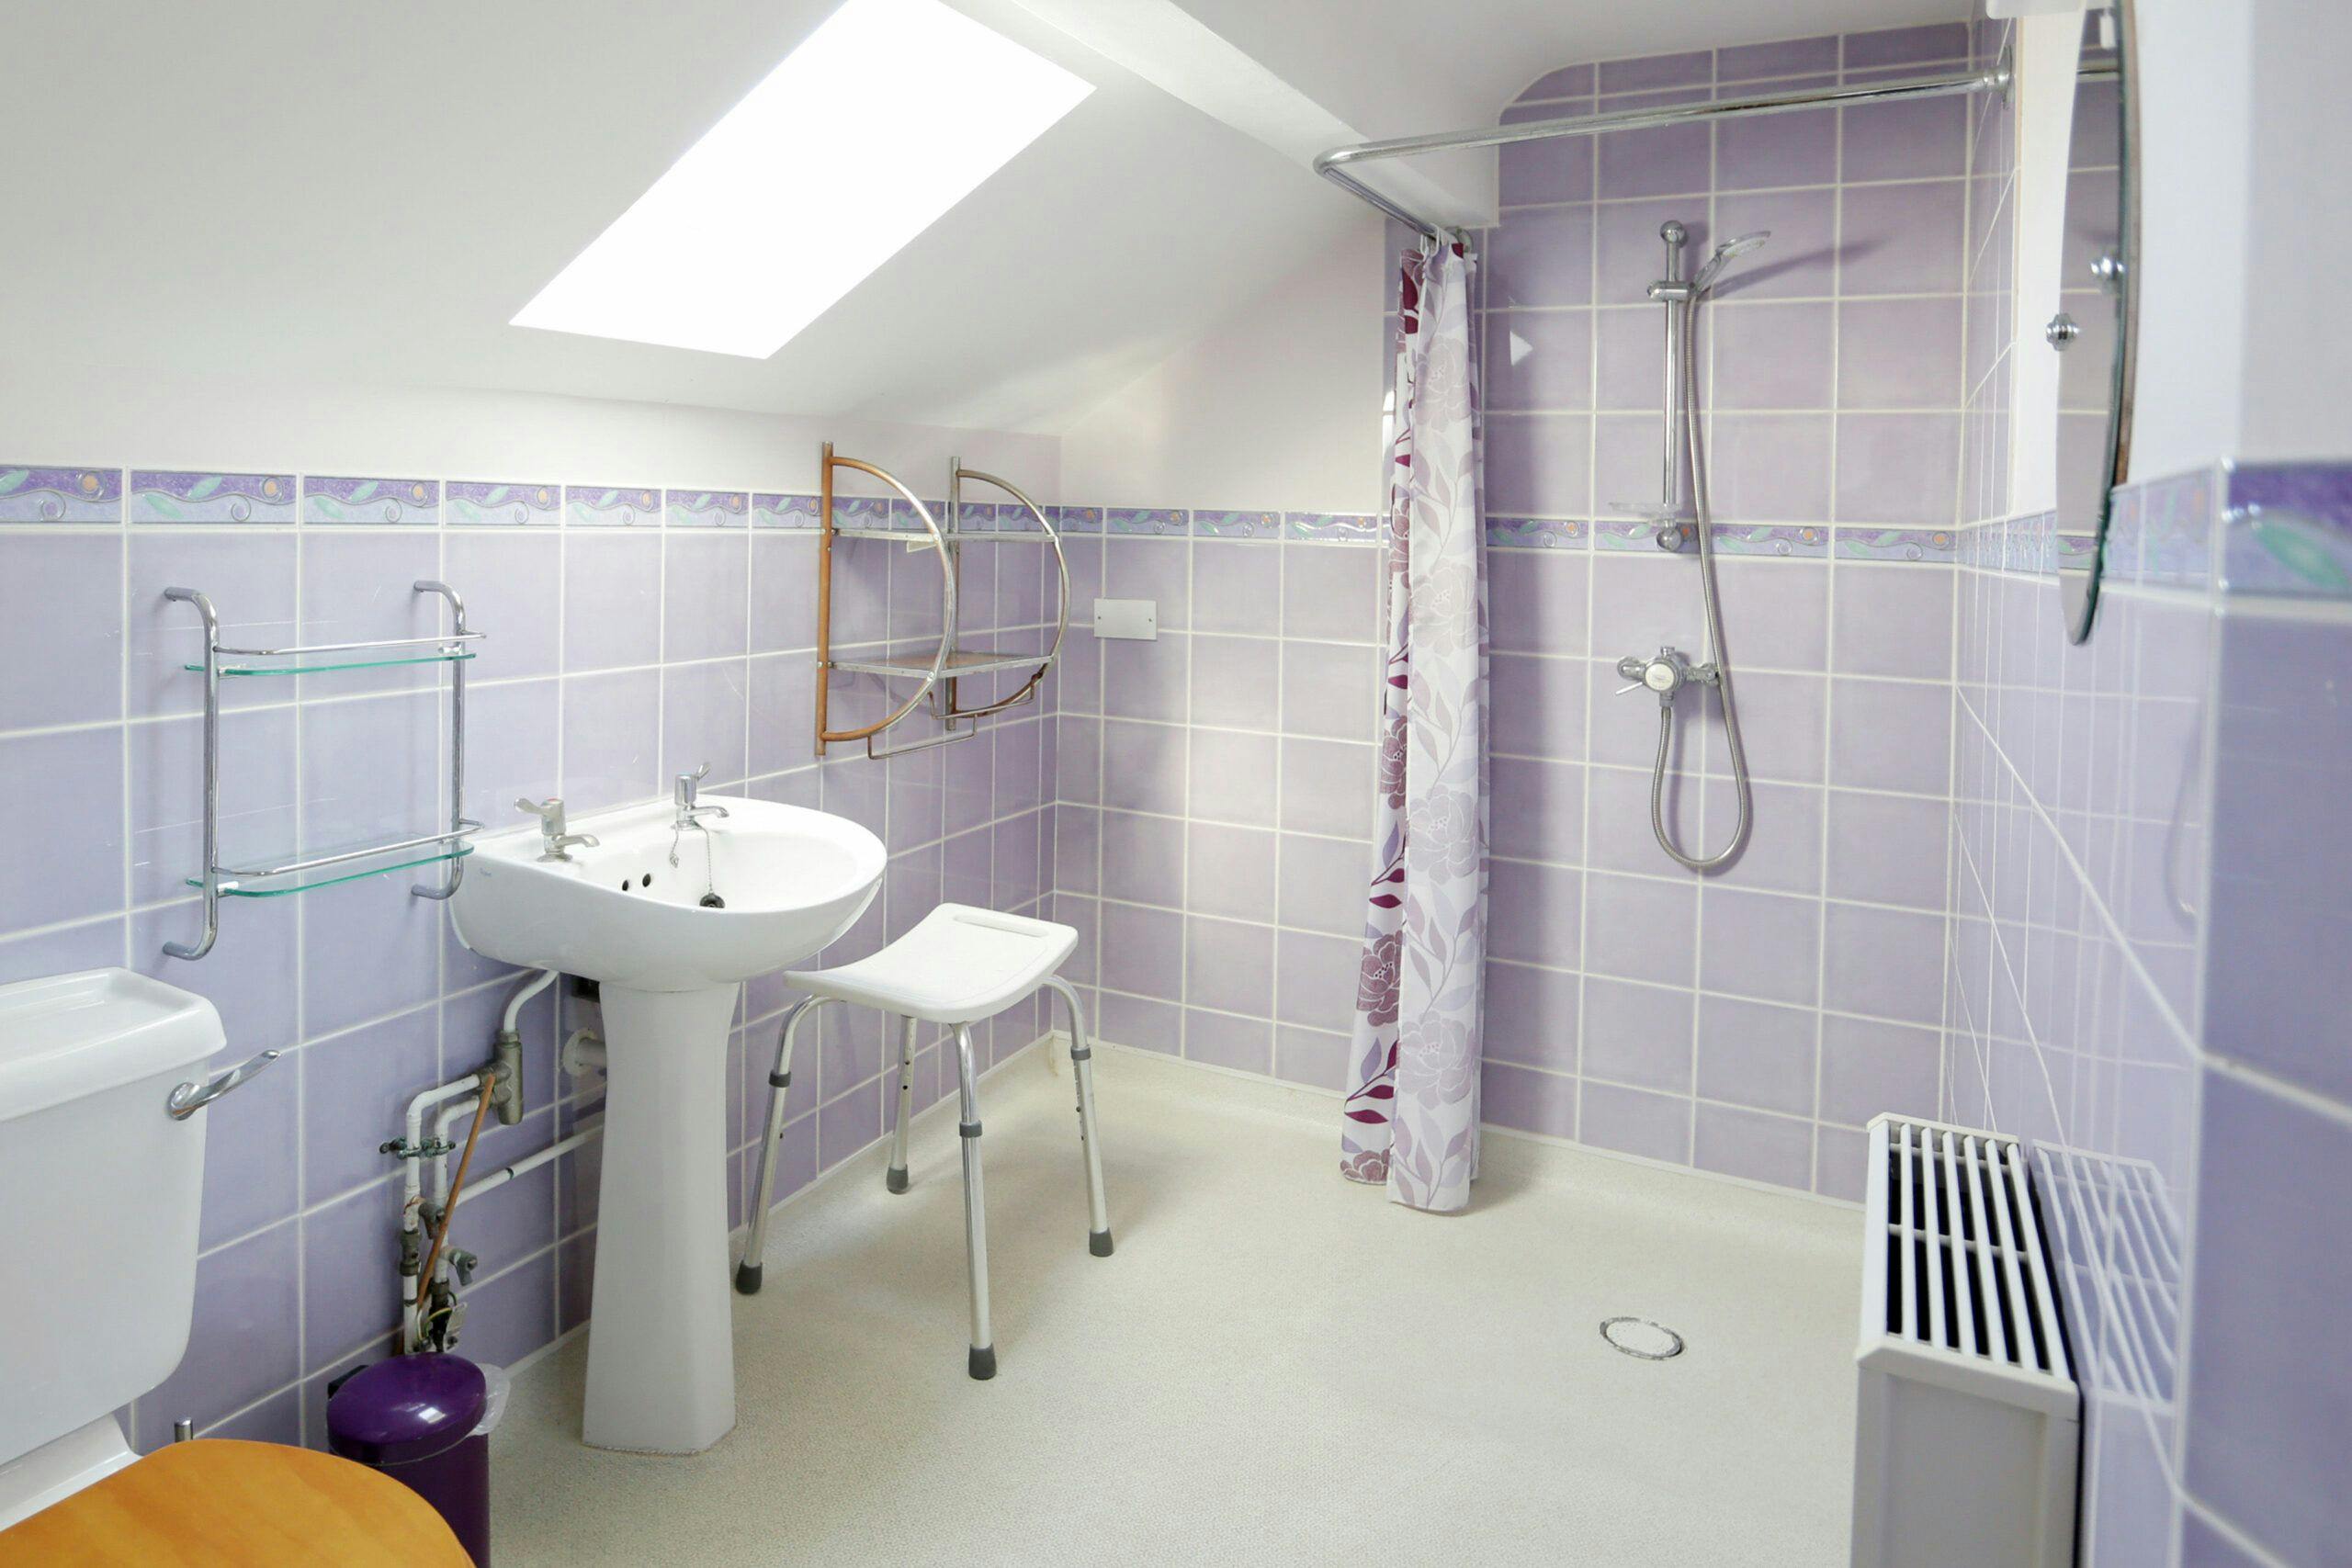 Bathroom at Arden House, Leamington Spa, Warwick